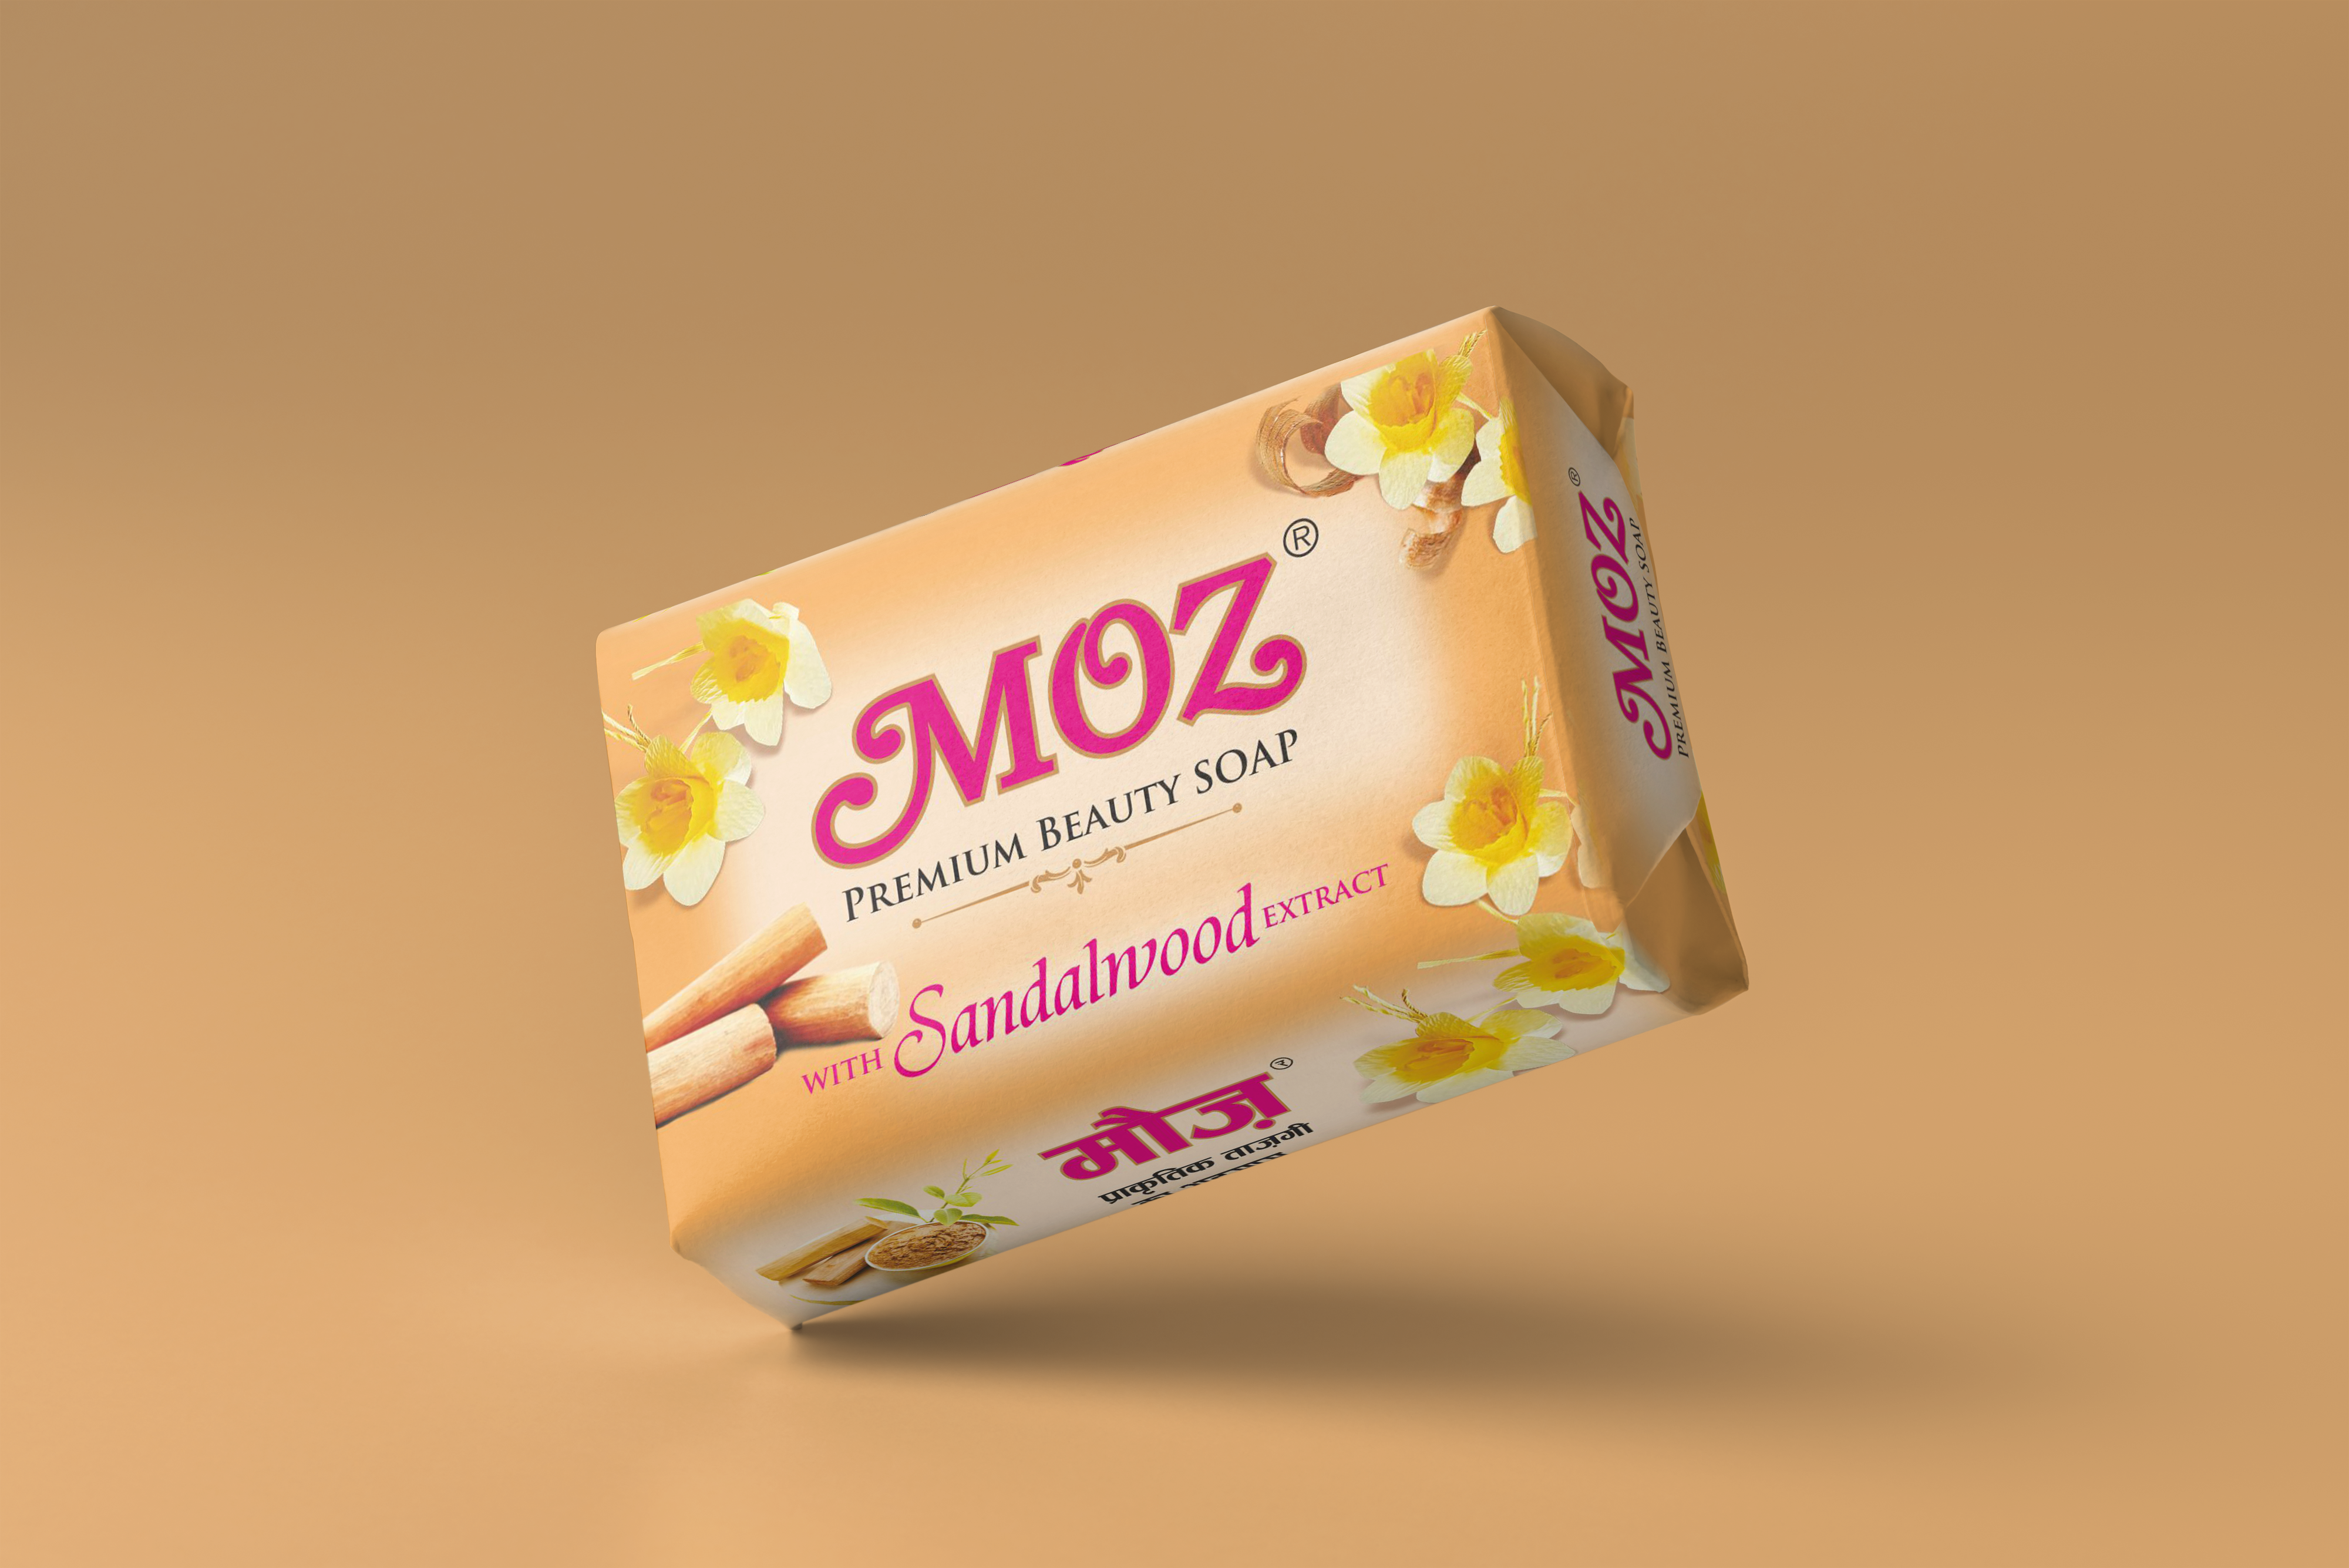 MOZ Bath Soap (Sandalwood Extracts)